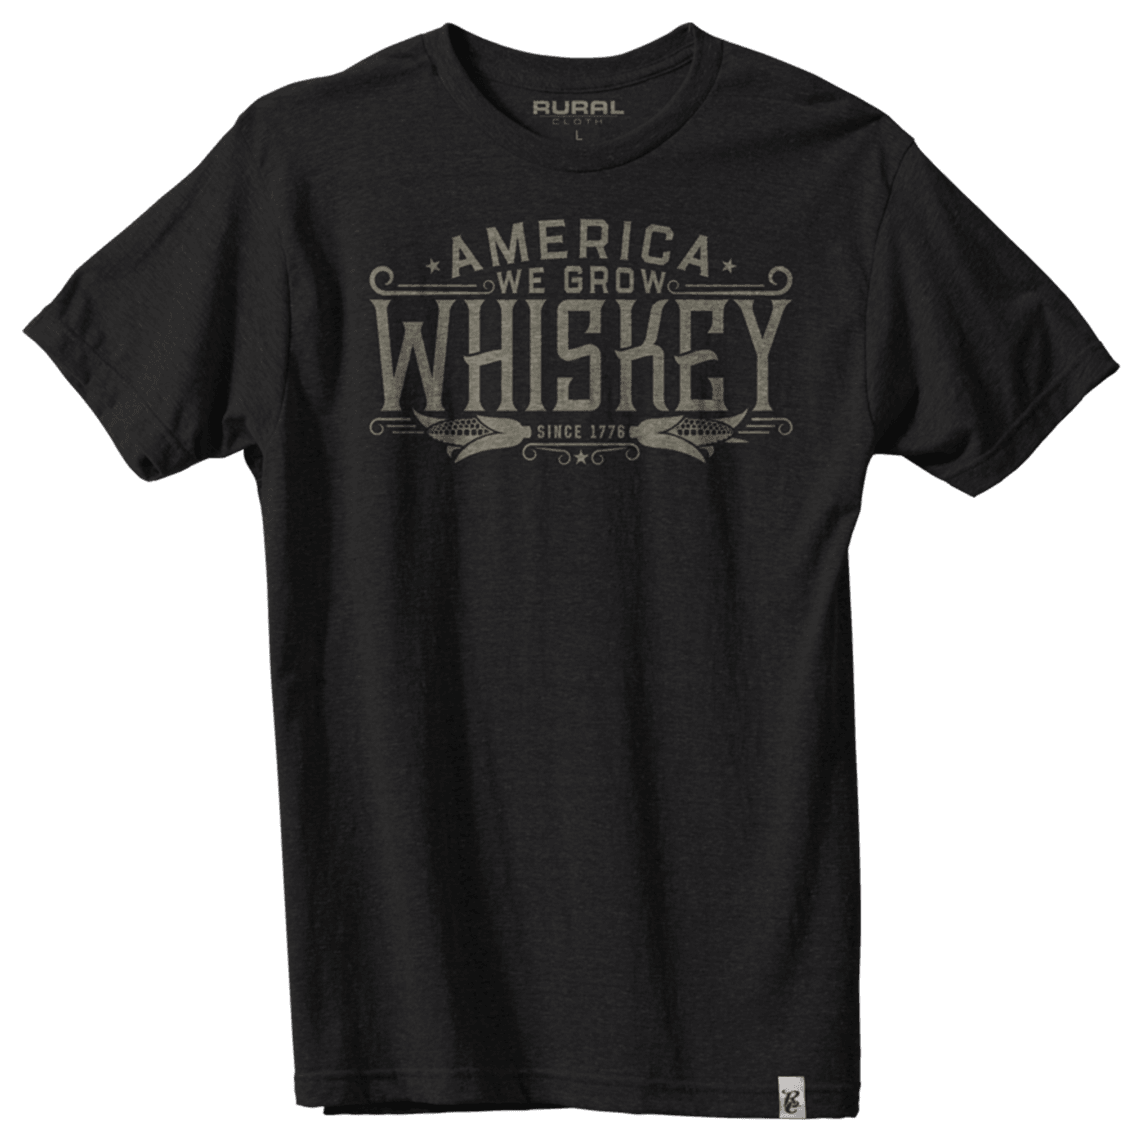 Rural Cloth Shirts America We Grow Whiskey Tee